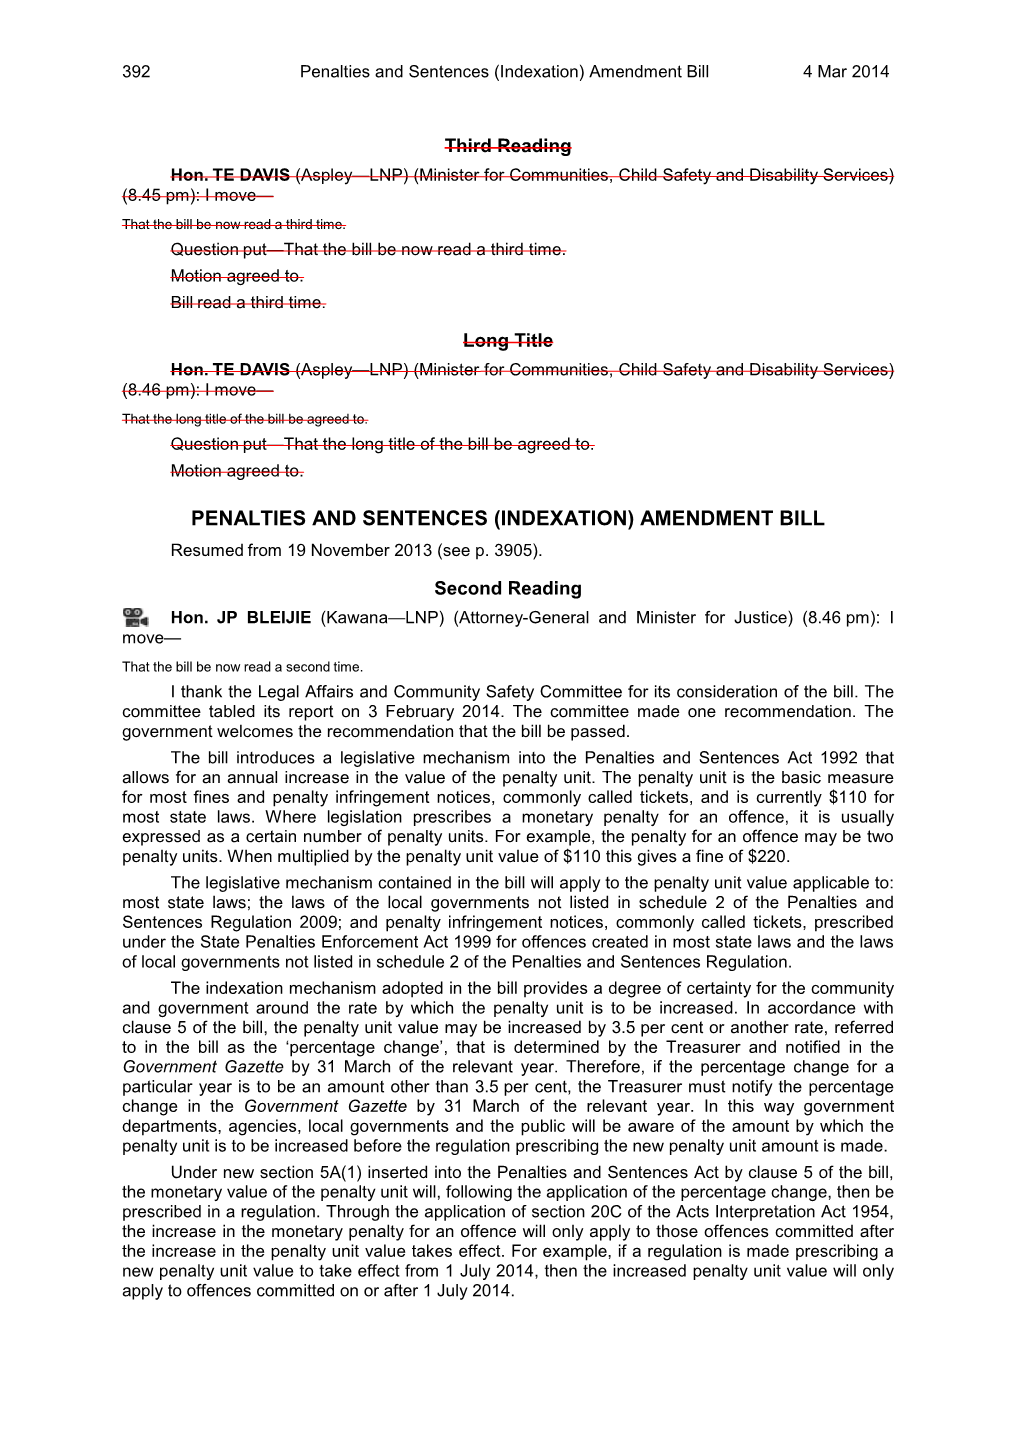 Penalties and Sentences (Indexation) Amendment Bill 4 Mar 2014